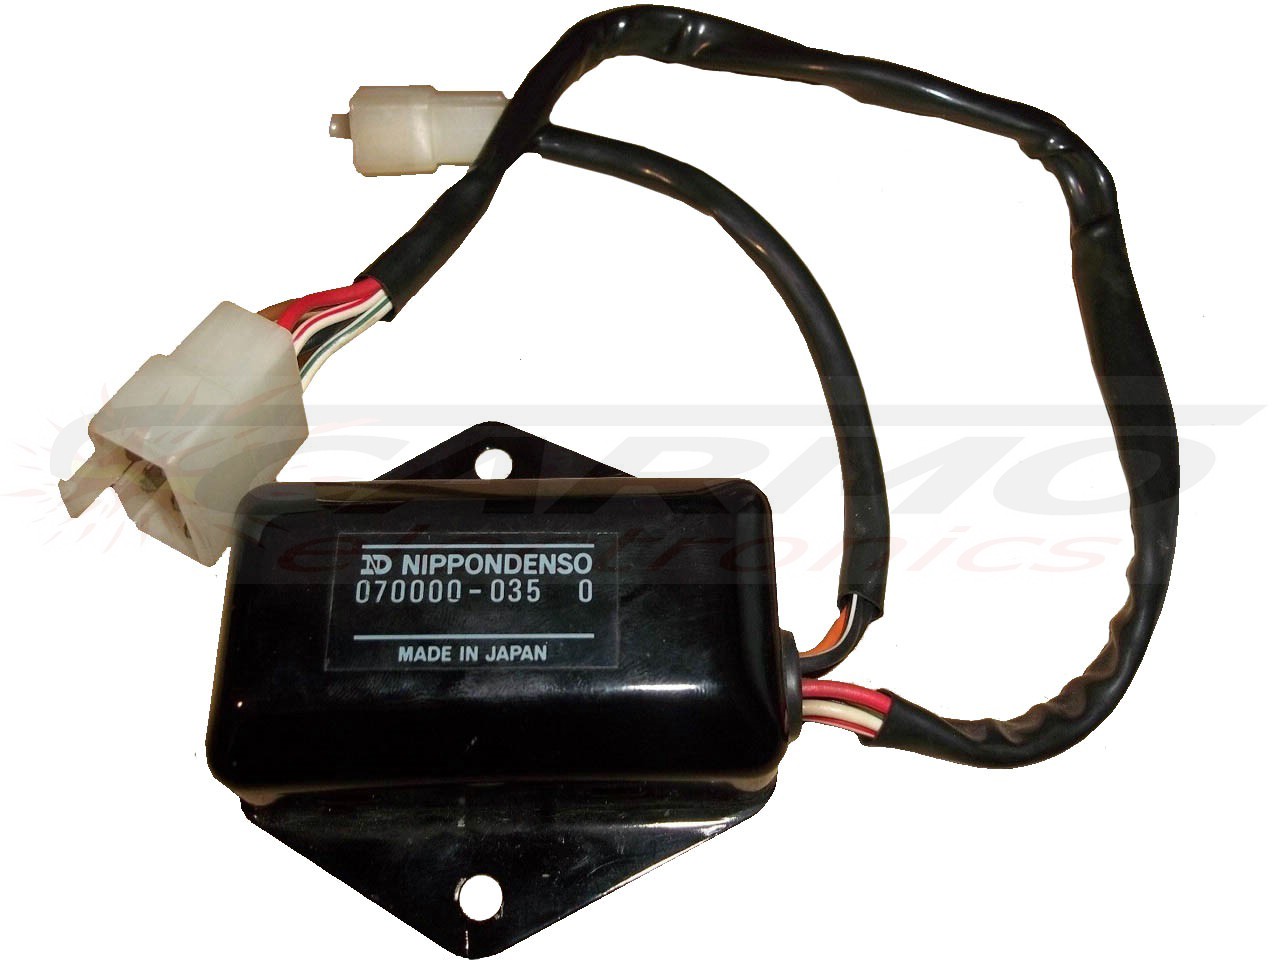 SR500 CDI dispositif de commande boîte noire (3HI-50, 070000-051)